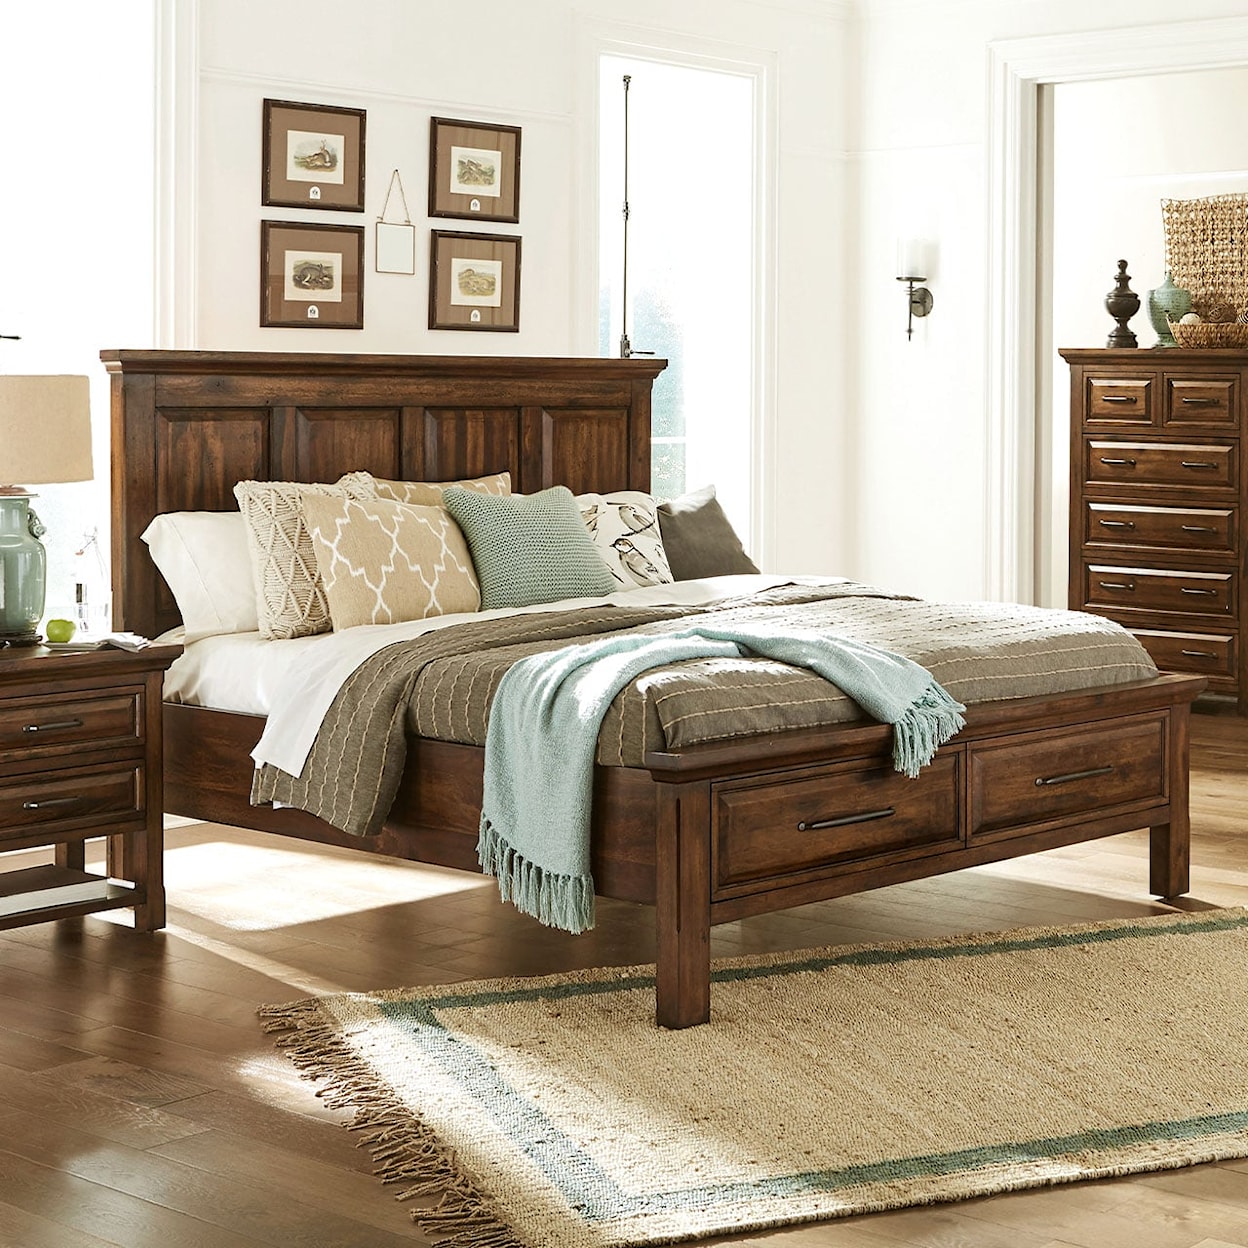 Virginia Furniture Market Solid Wood Durham King Storage Bed